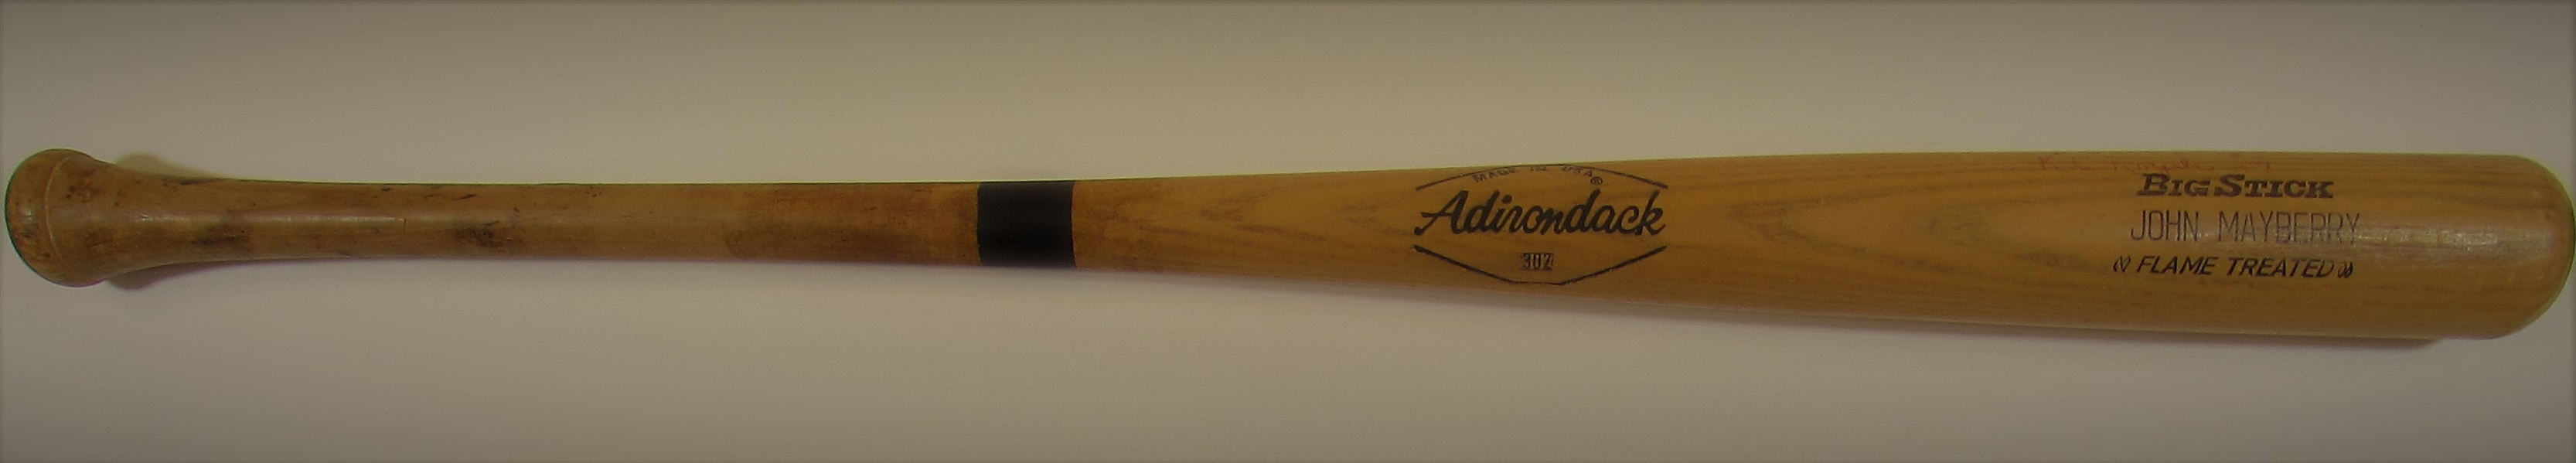 1971-79 John Mayberry GU Signed Bat